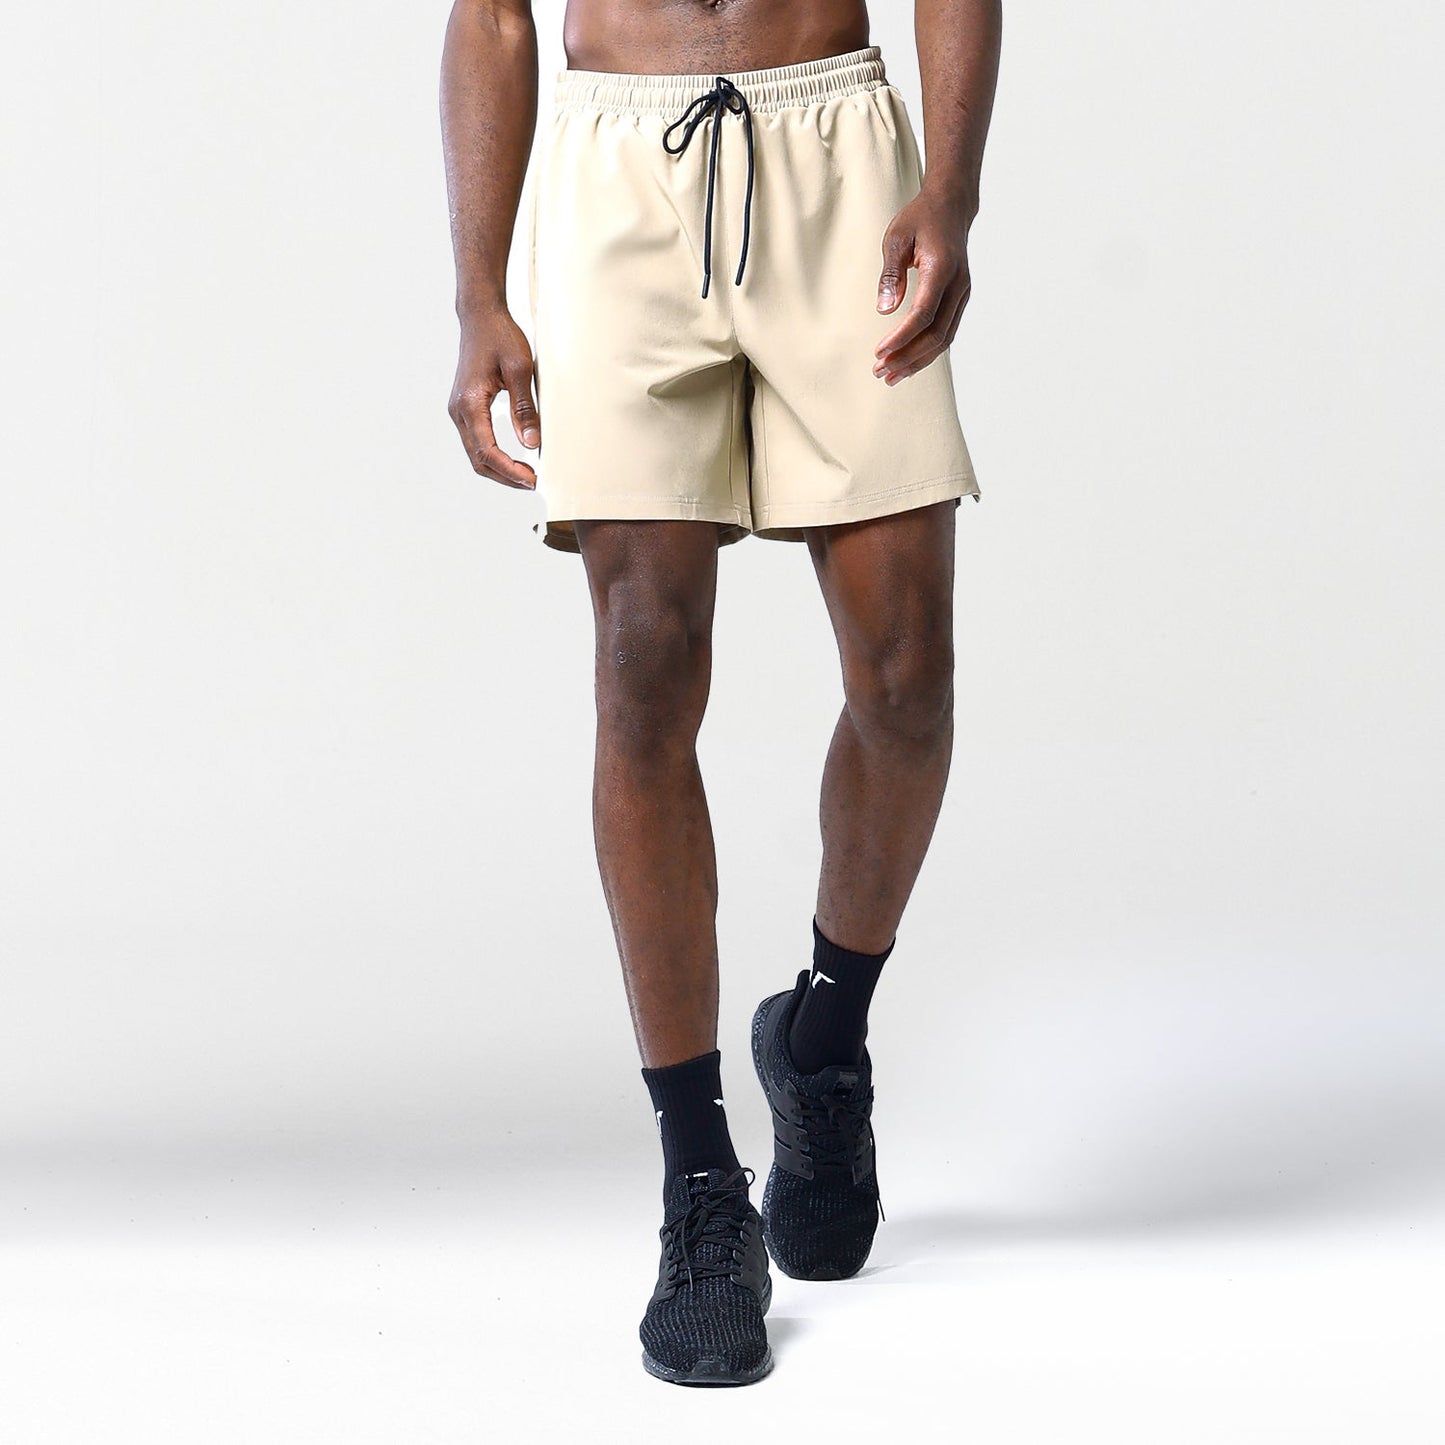 squatwolf-gym-wear-essential-7-inch-shorts-bundle-1-workout-short-for-men